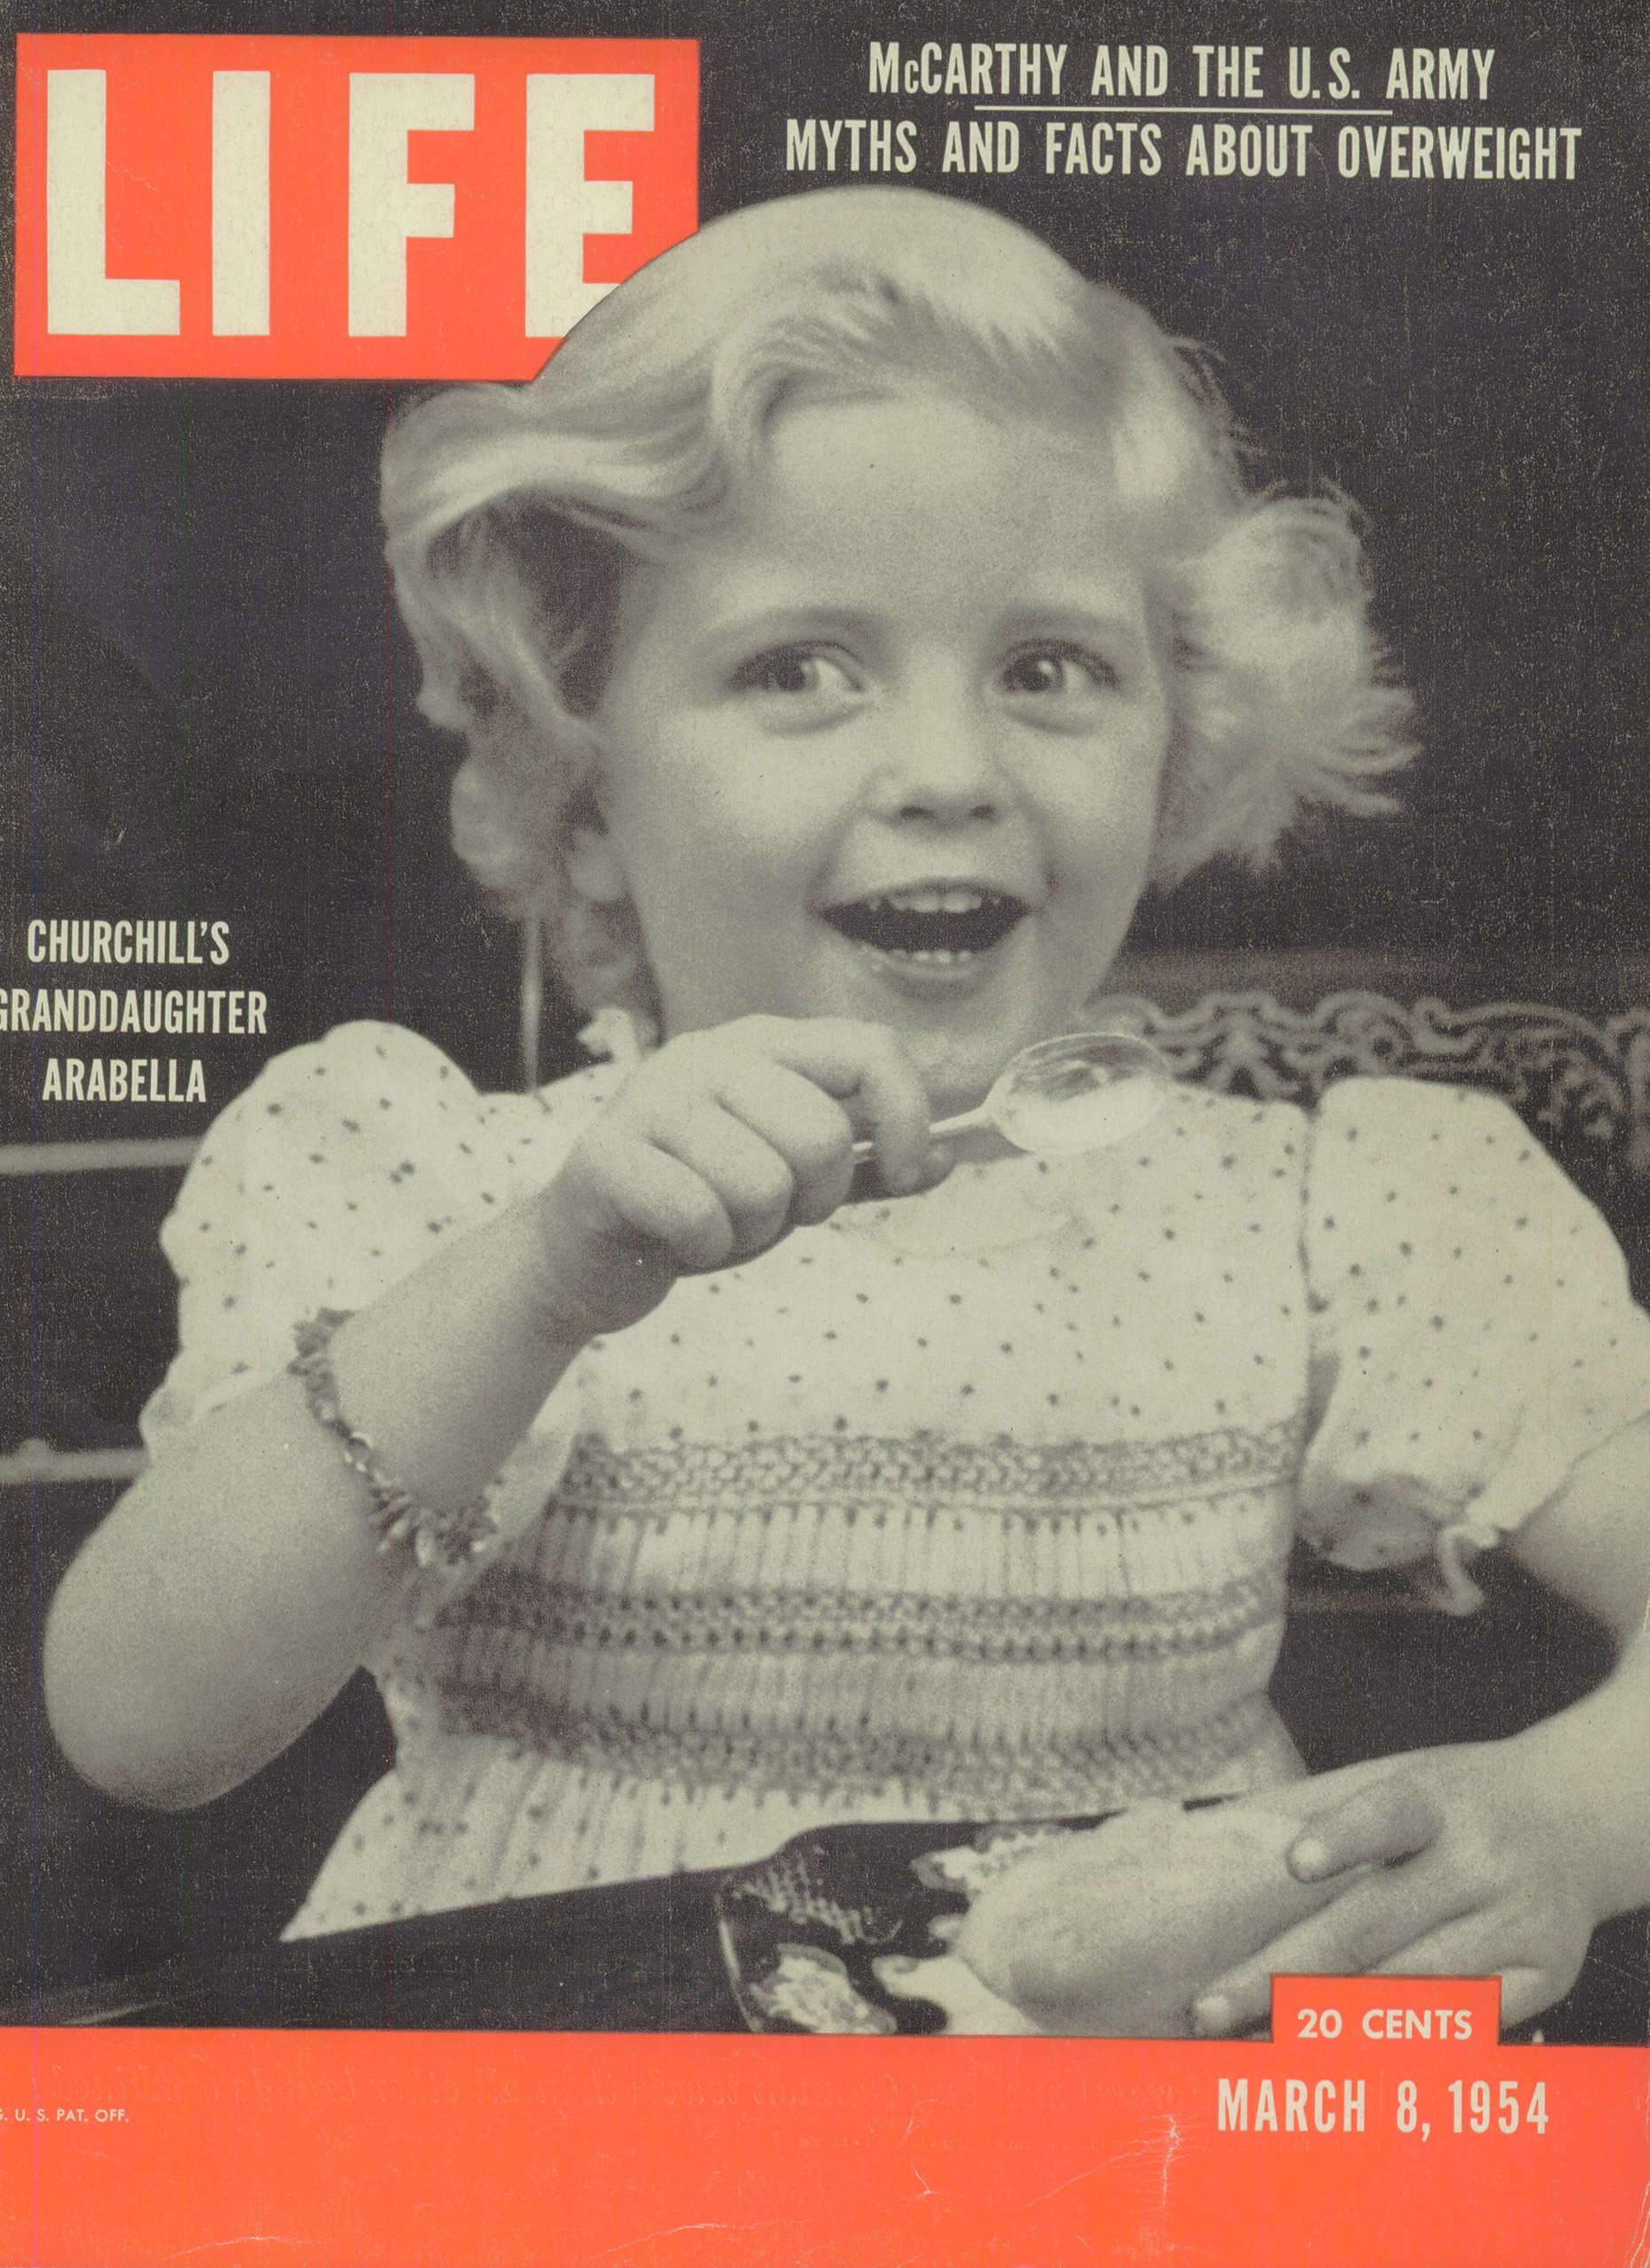 Mar. 8, 1954 cover of LIFE magazine.